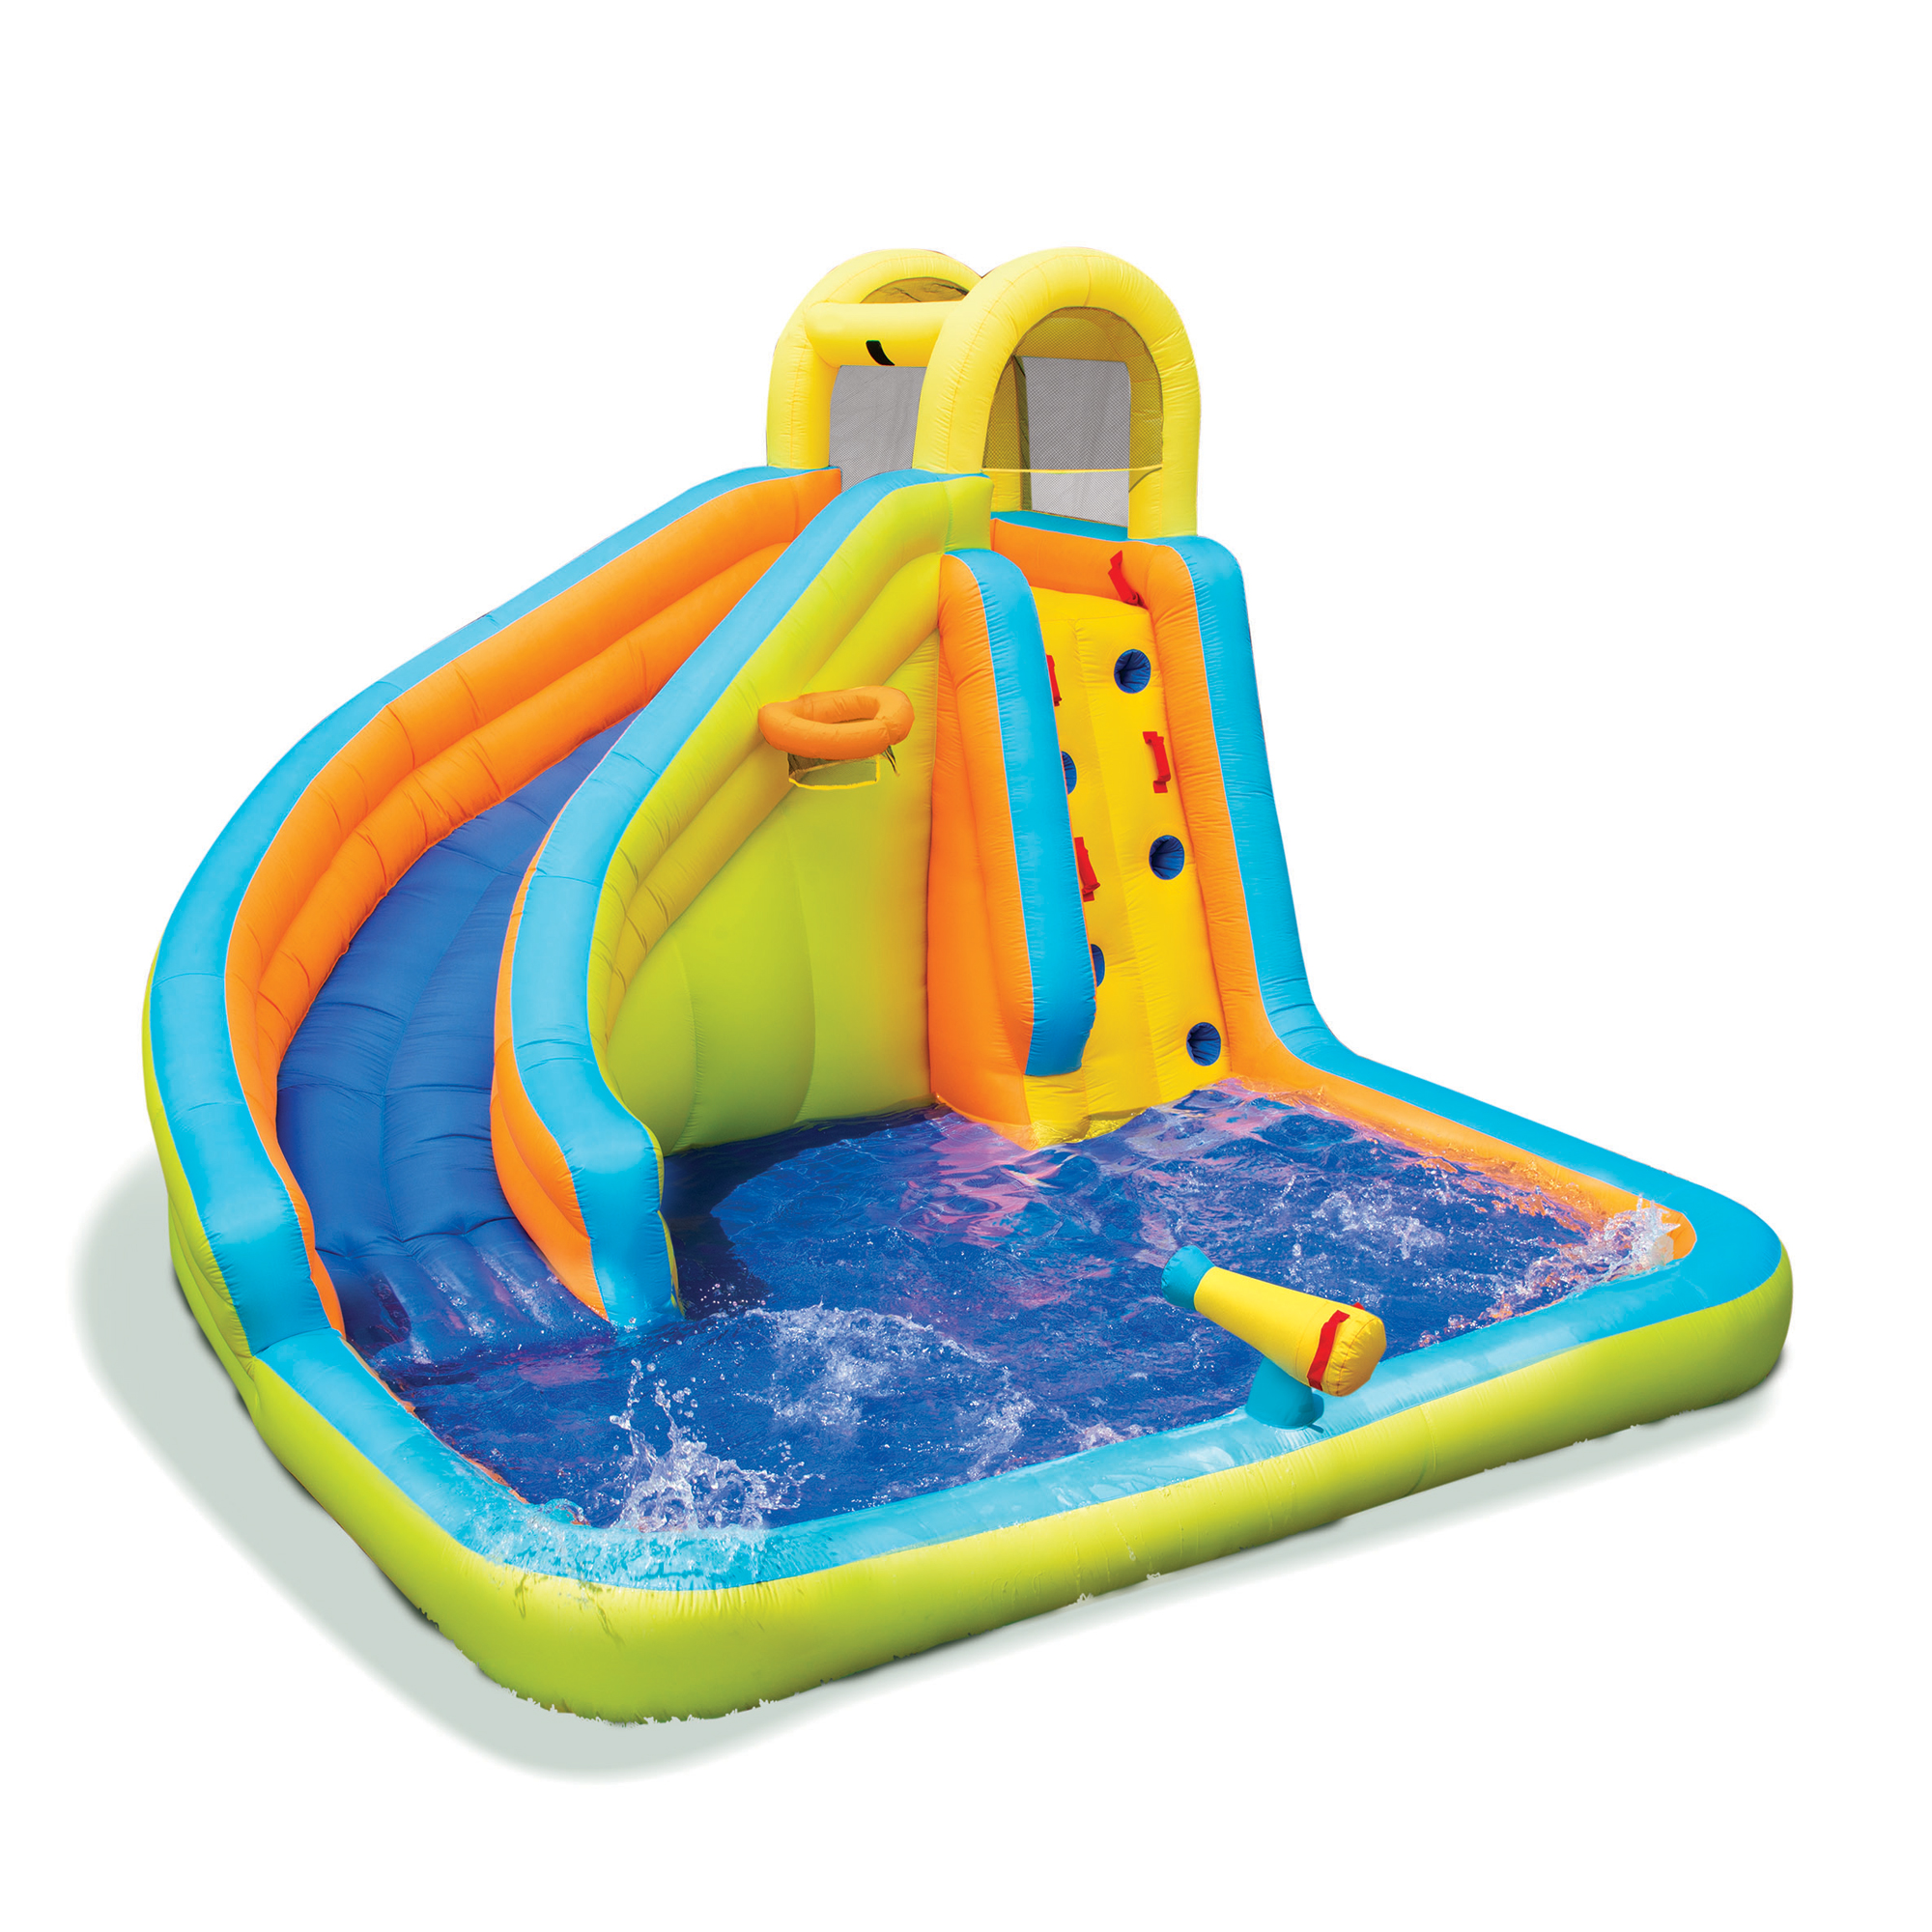 Banzai Splash N Blast Kids Backyard Inflatable Water Slide Park Open Box 191124281403 Ebay